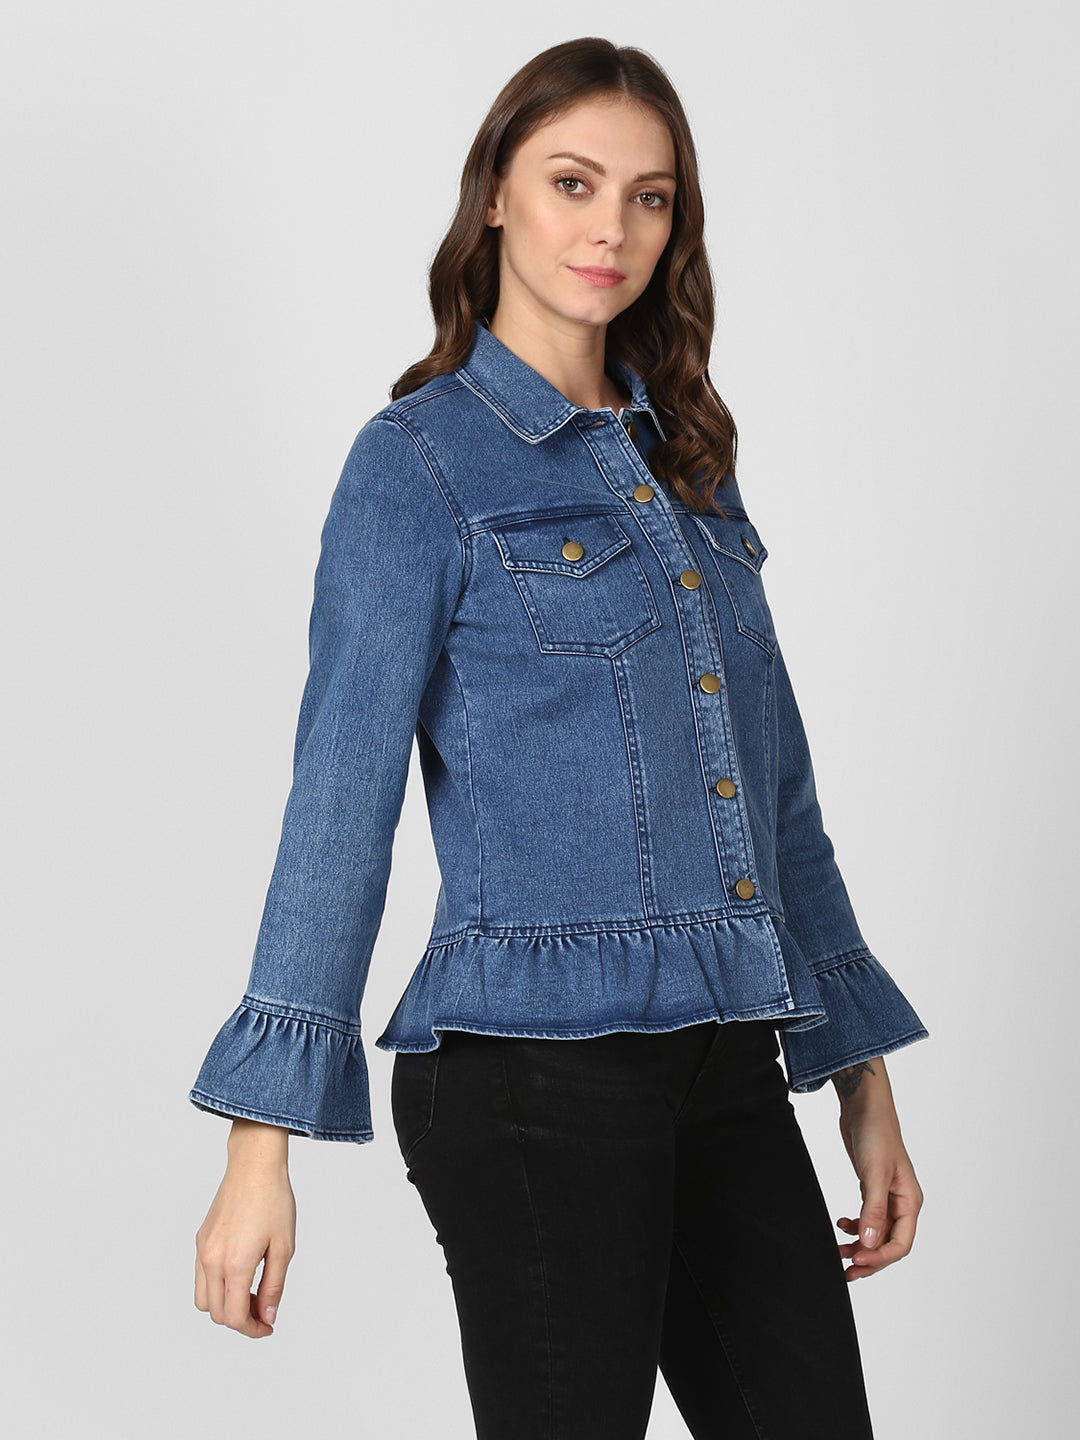 Women's Blue Denim Peplum Style Jacket